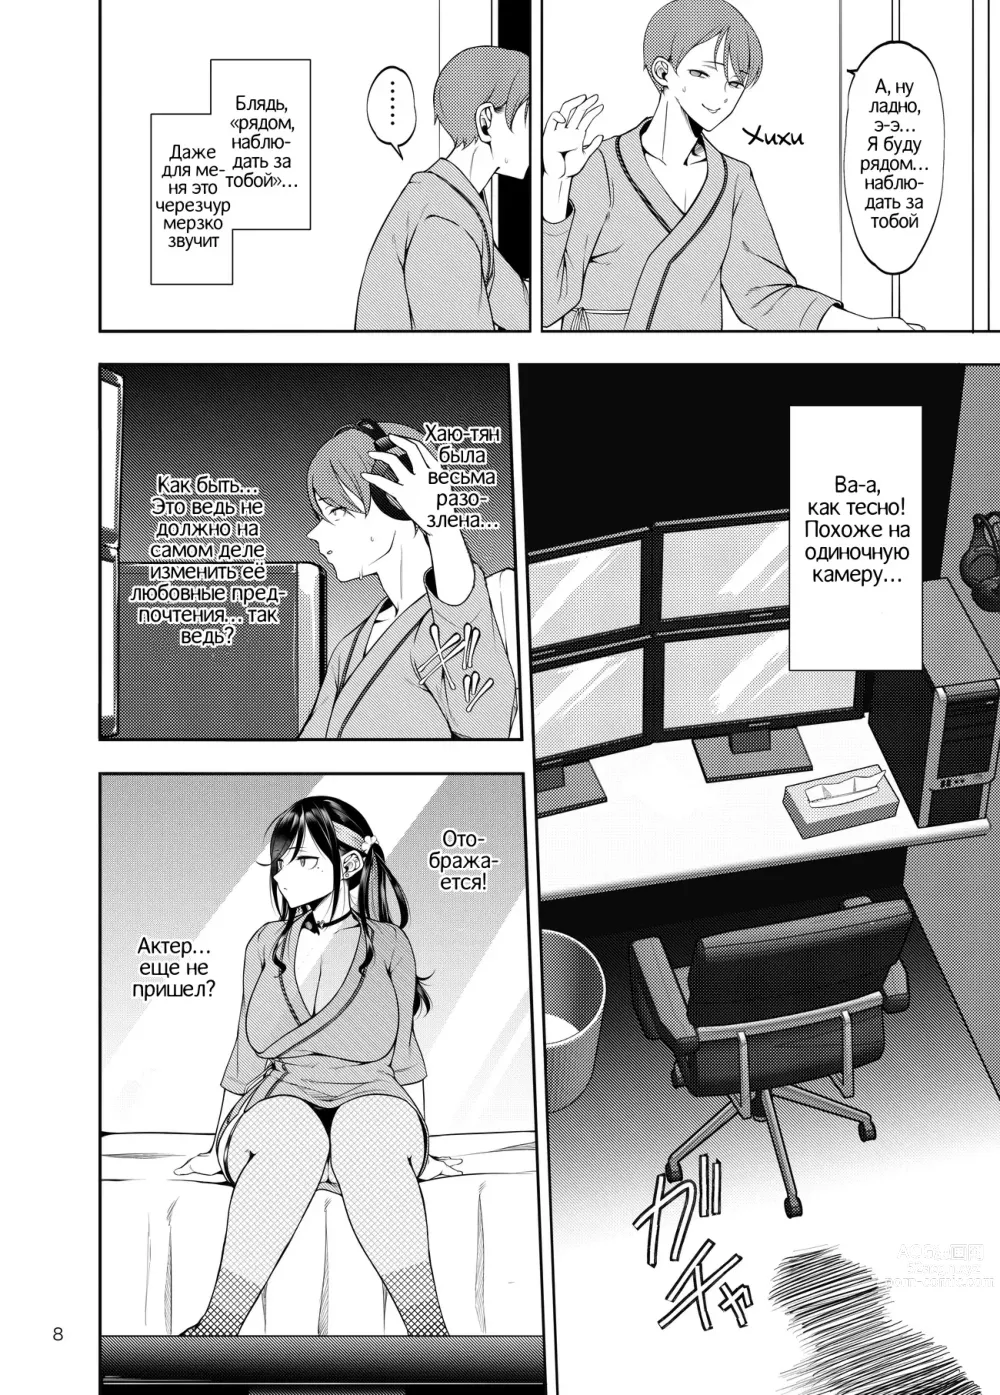 Page 9 of doujinshi Мне не стоило приводить девушку в салон куколдских секс-услуг